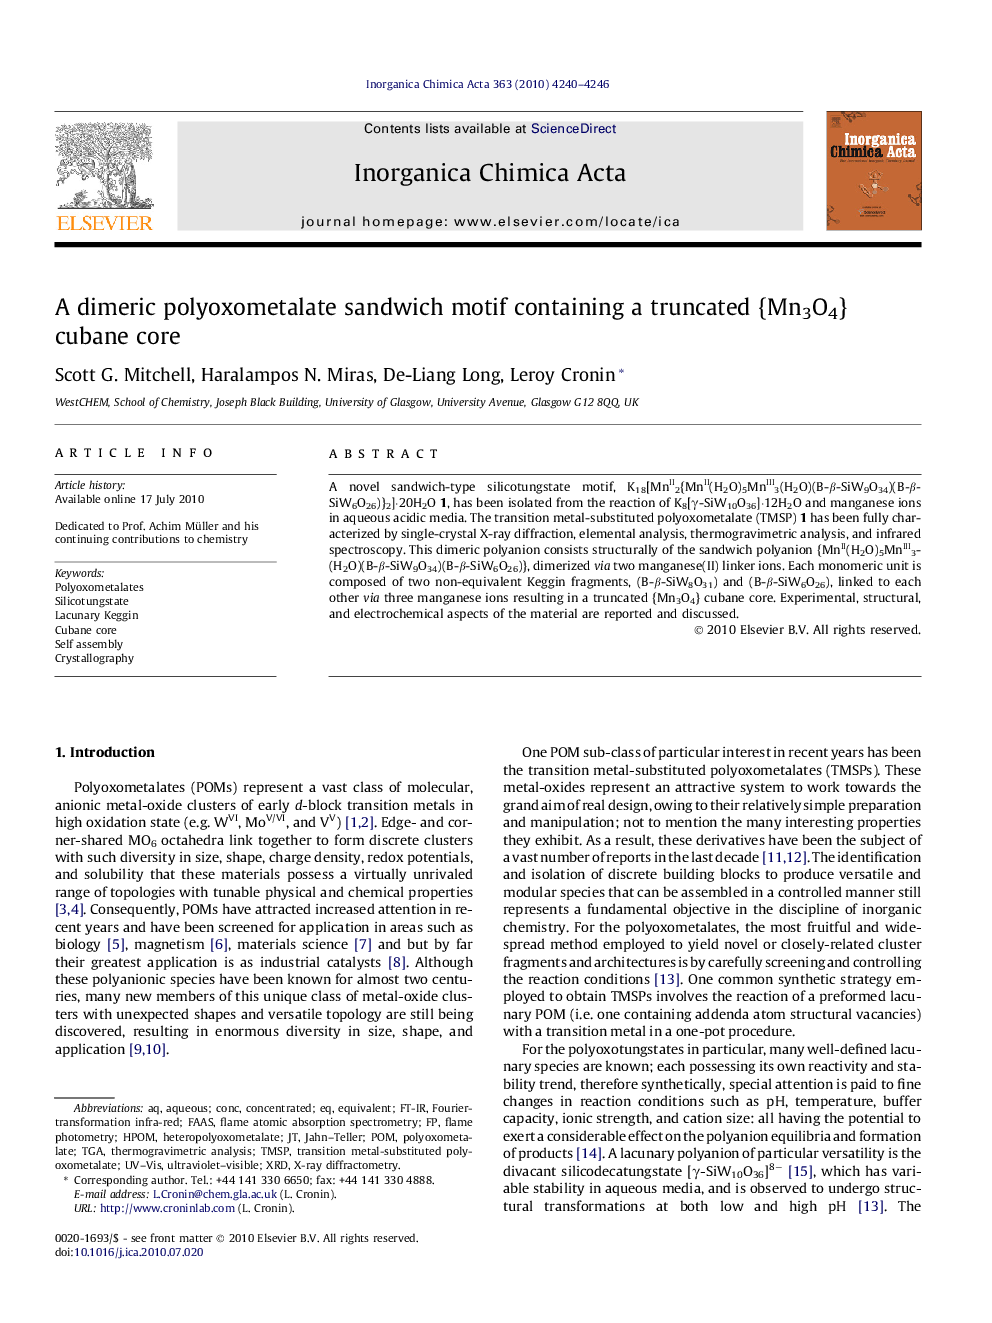 A dimeric polyoxometalate sandwich motif containing a truncated {Mn3O4} cubane core